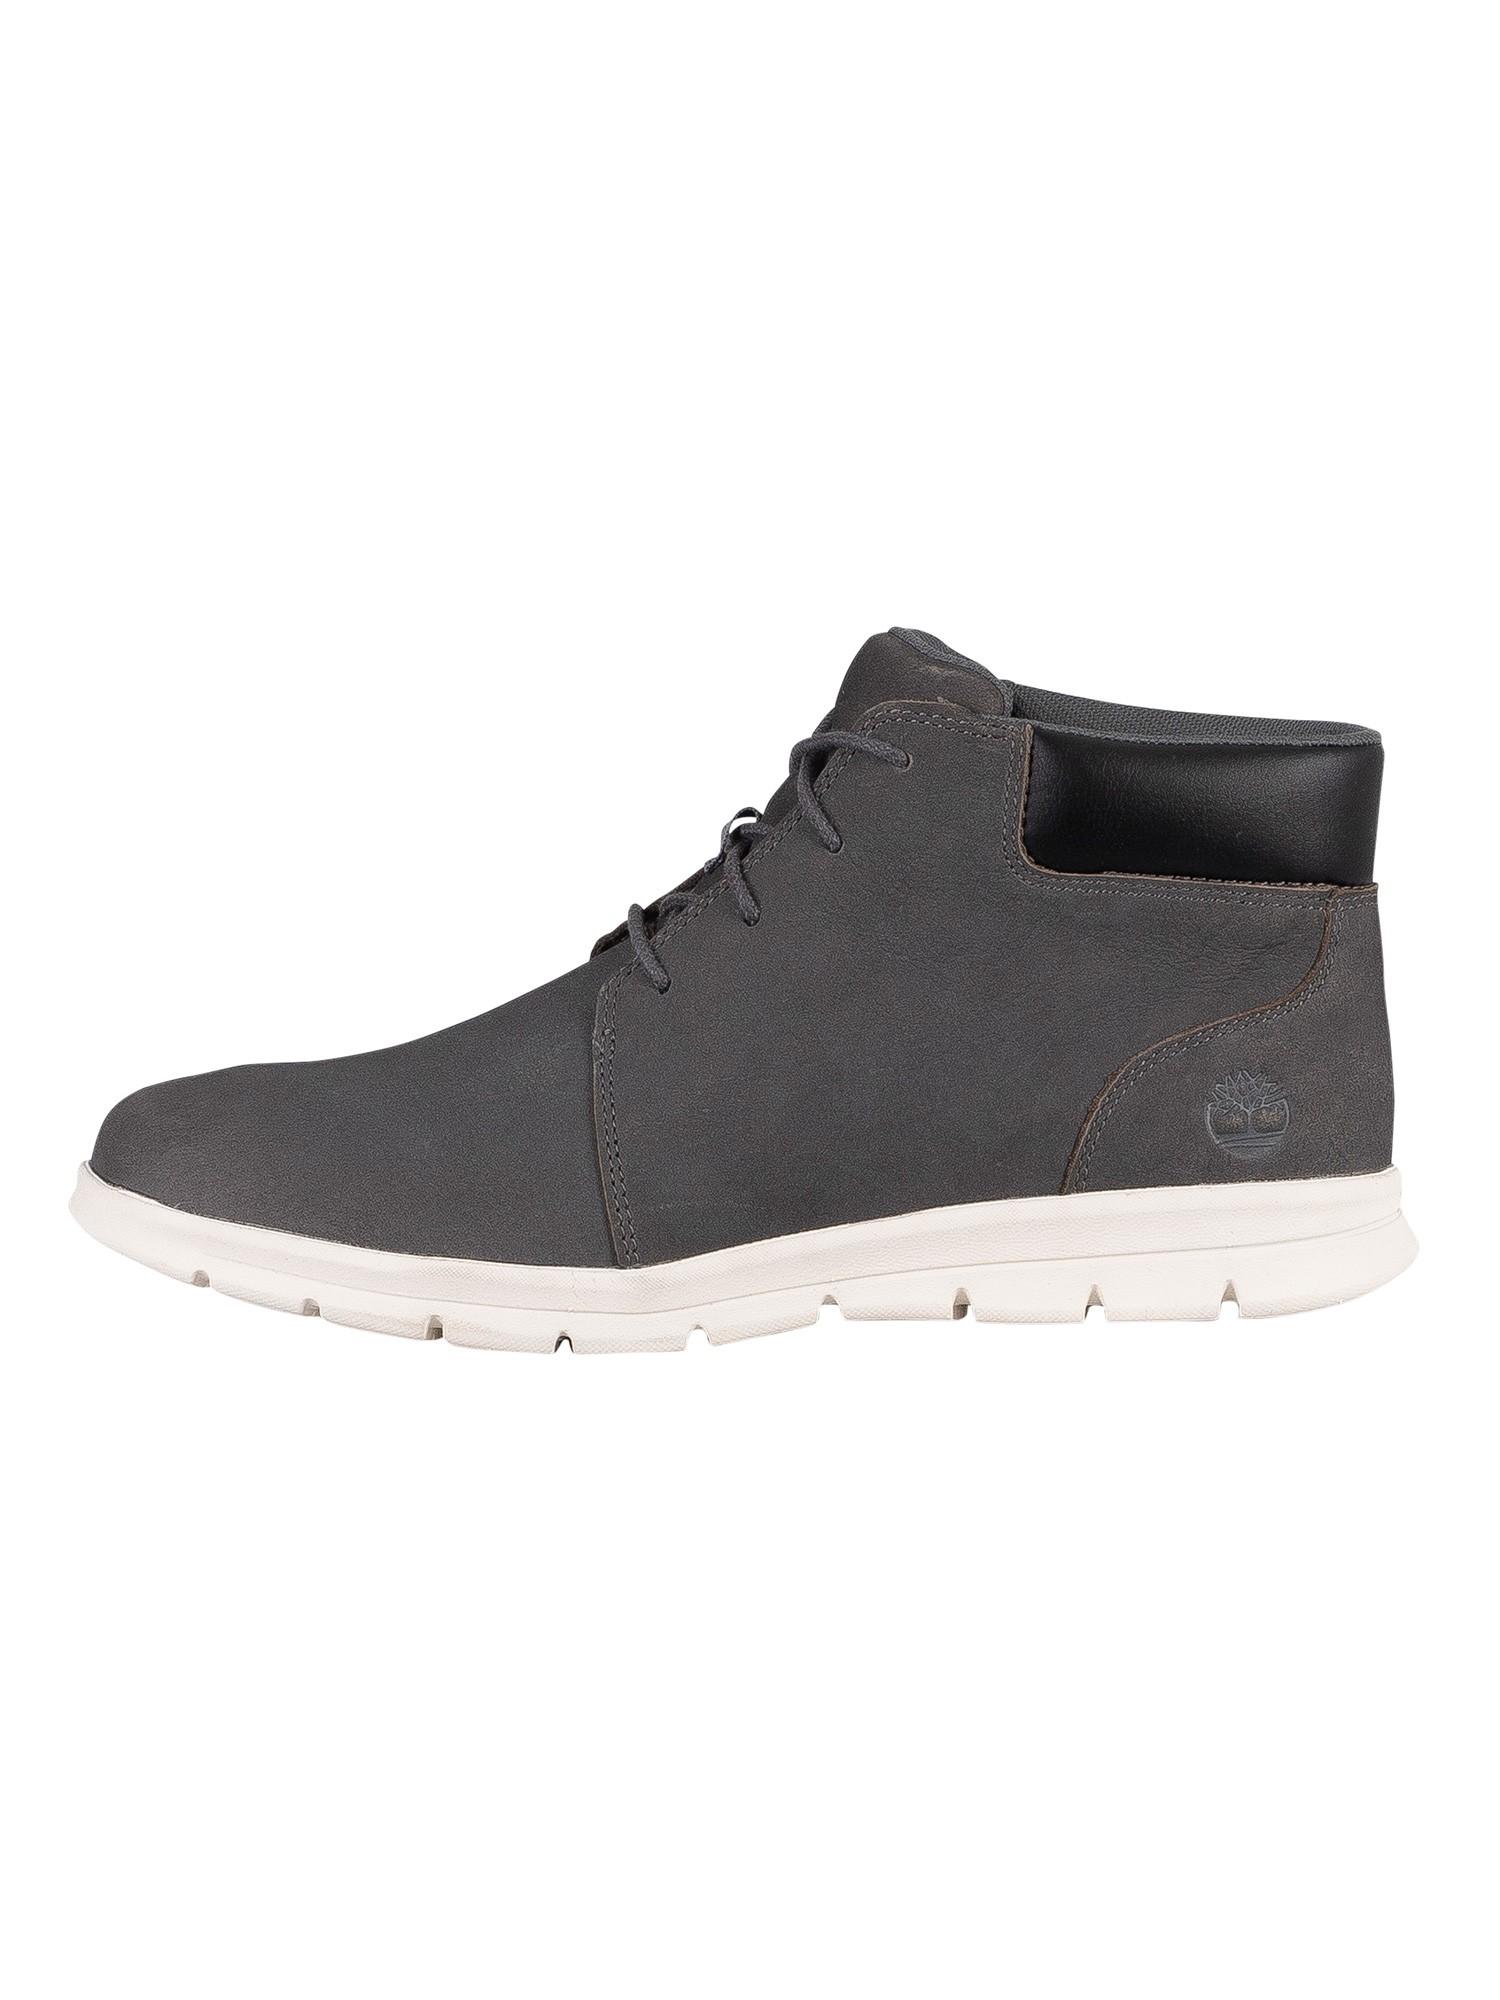 Timberland Leather Graydon Chukka Boots for Men | Lyst